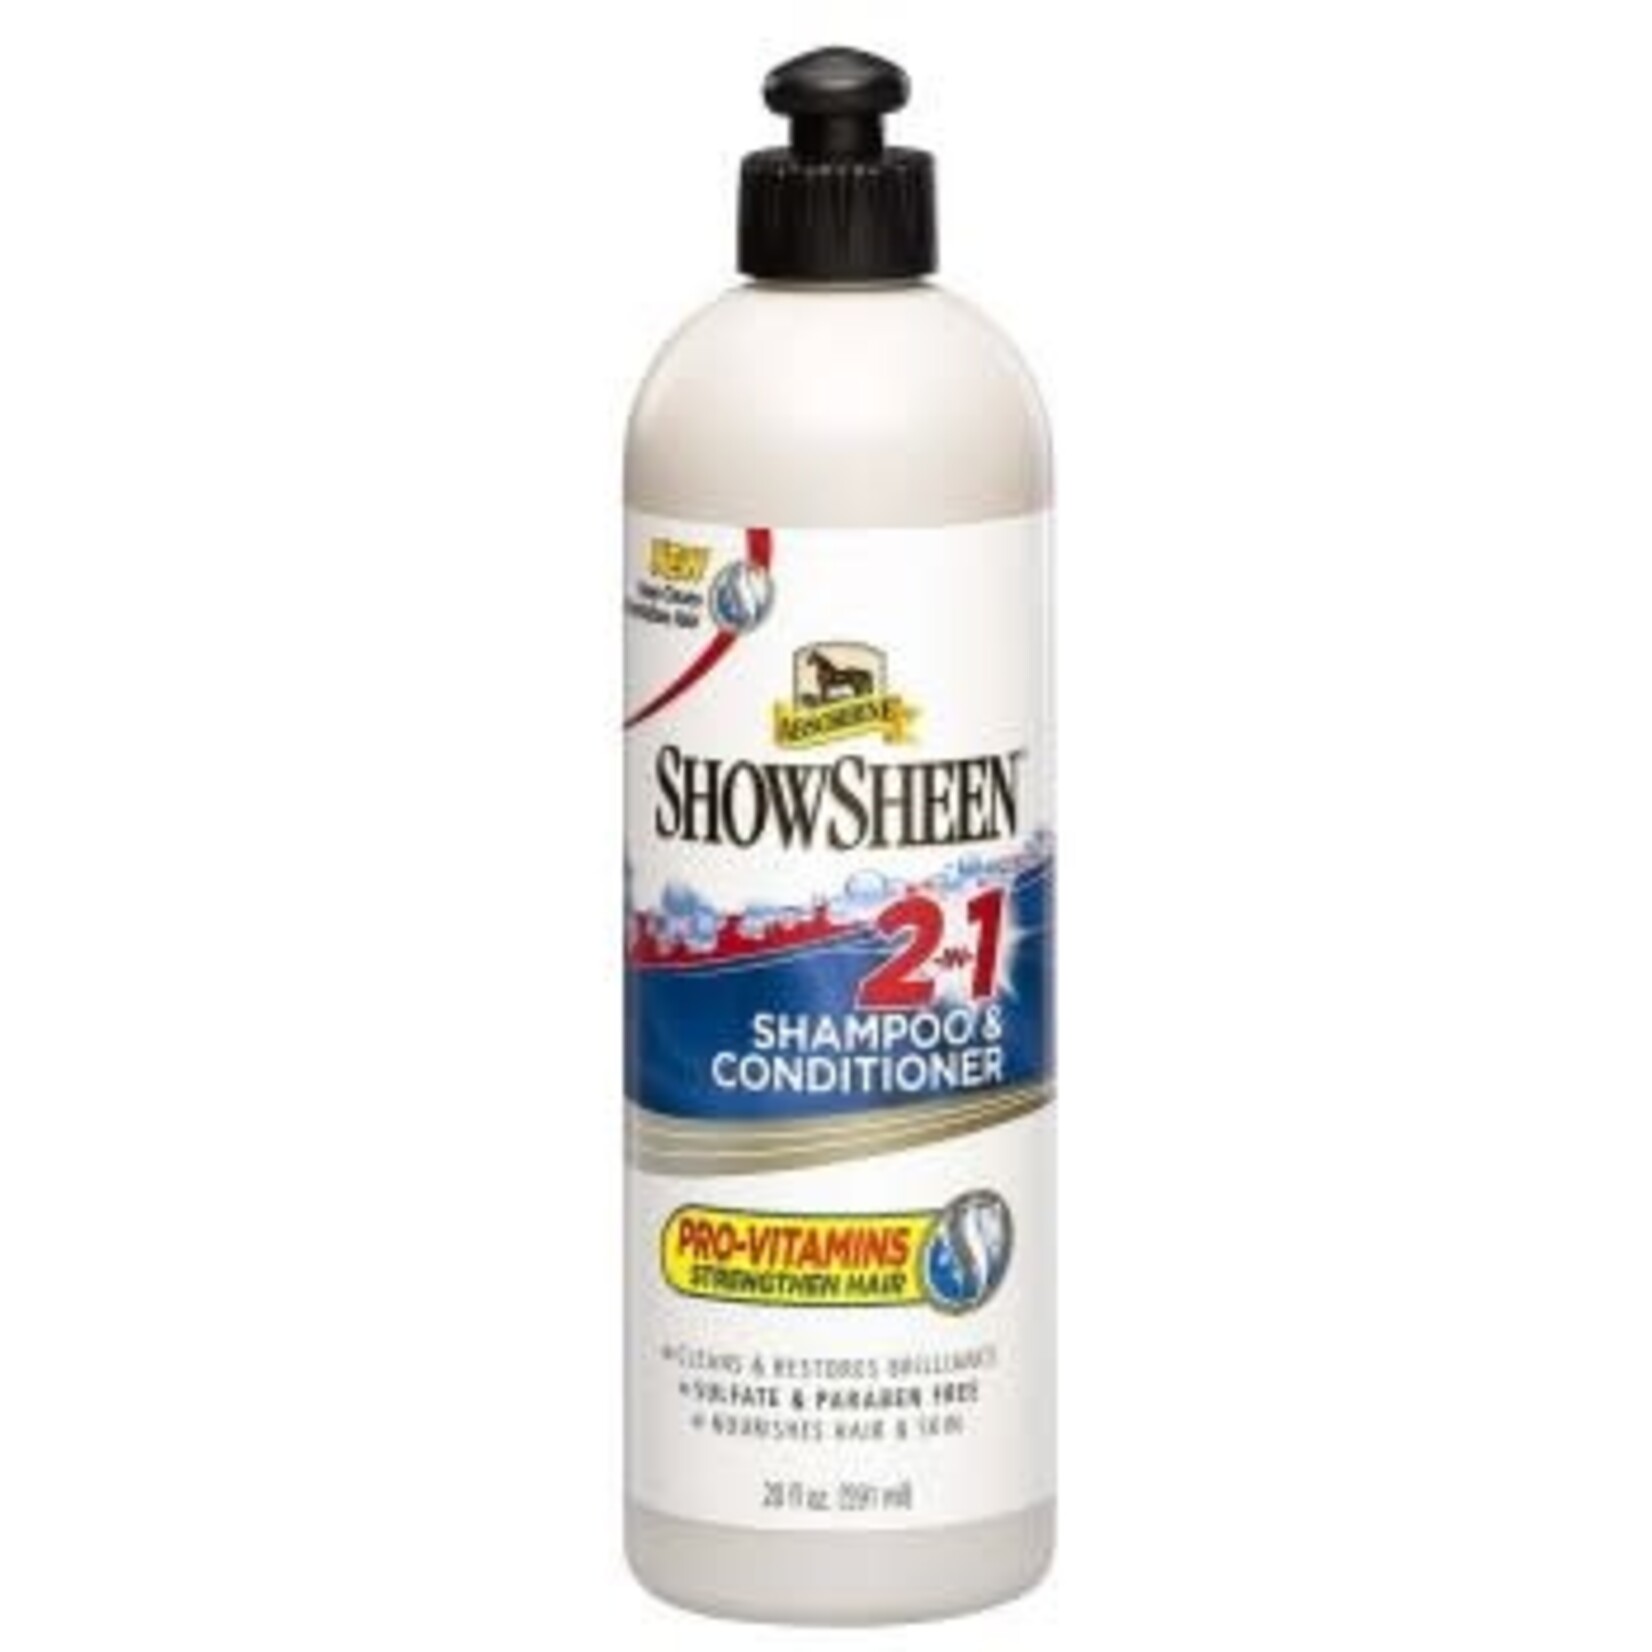 Absorbine Showsheen Shampoo/Conditioner